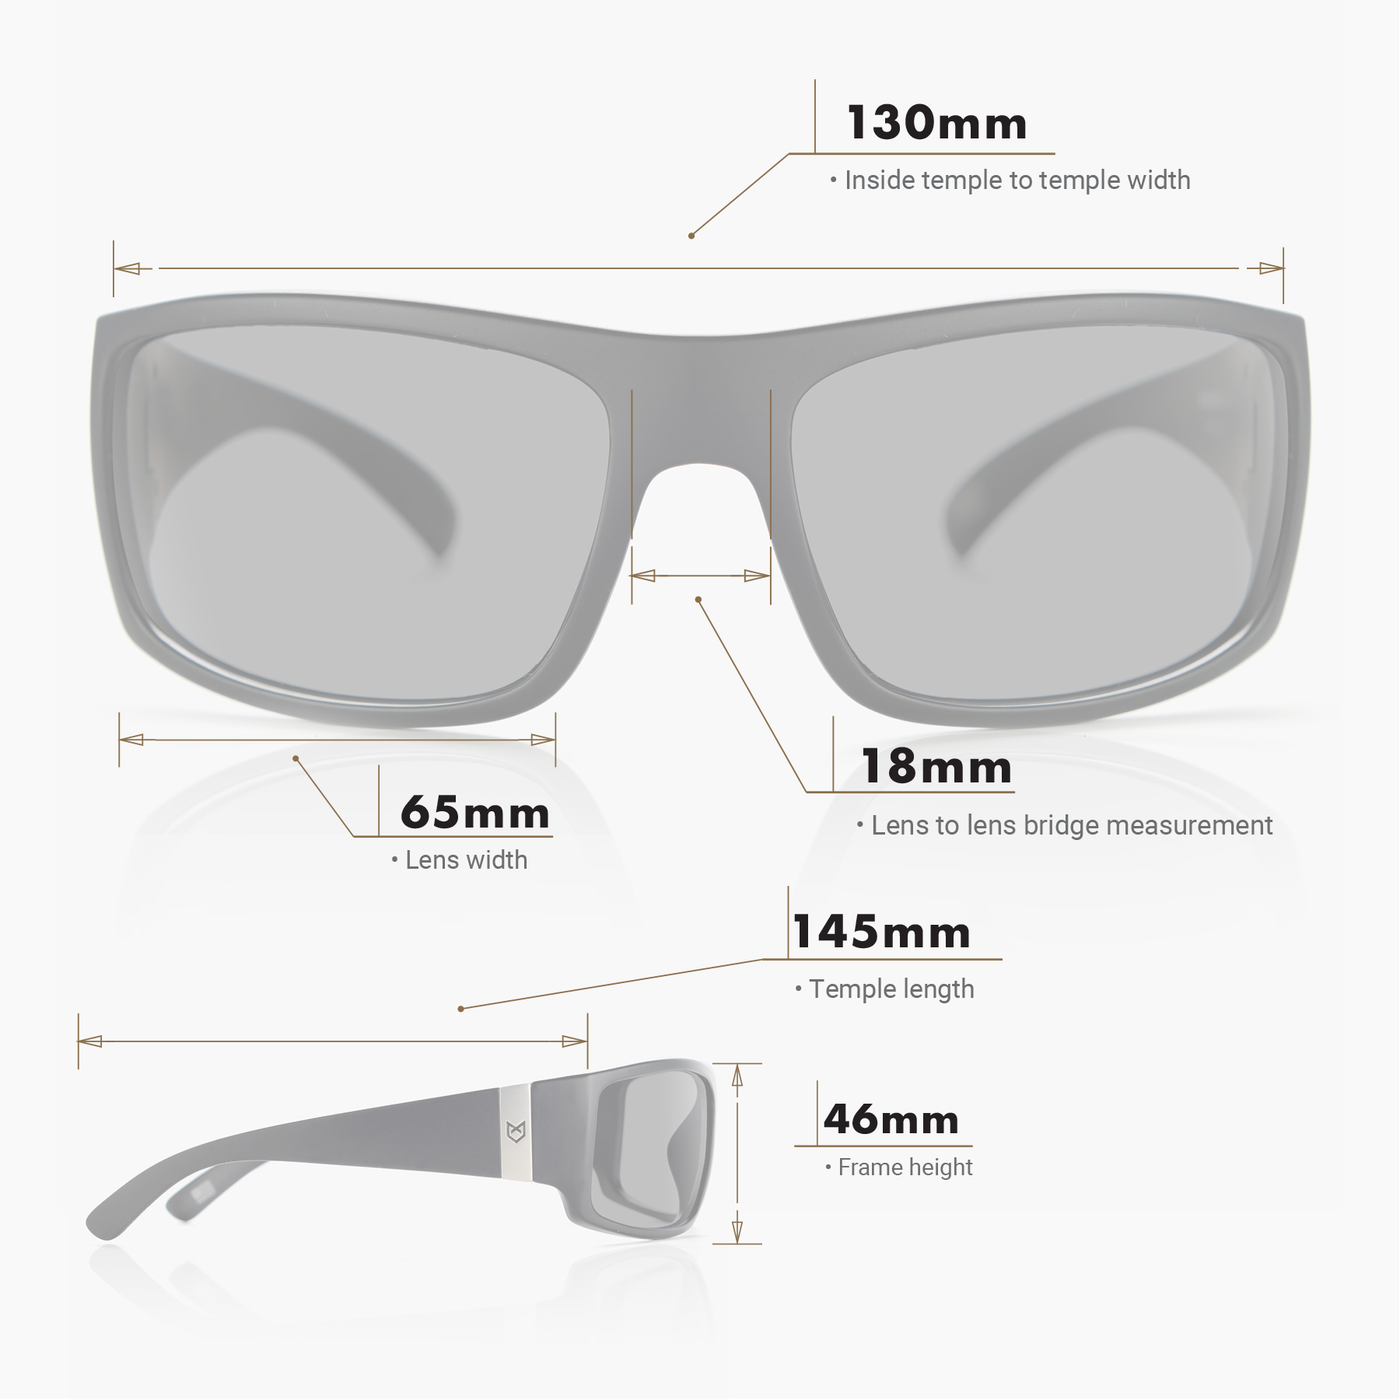 measurements for wide fit sunglasses